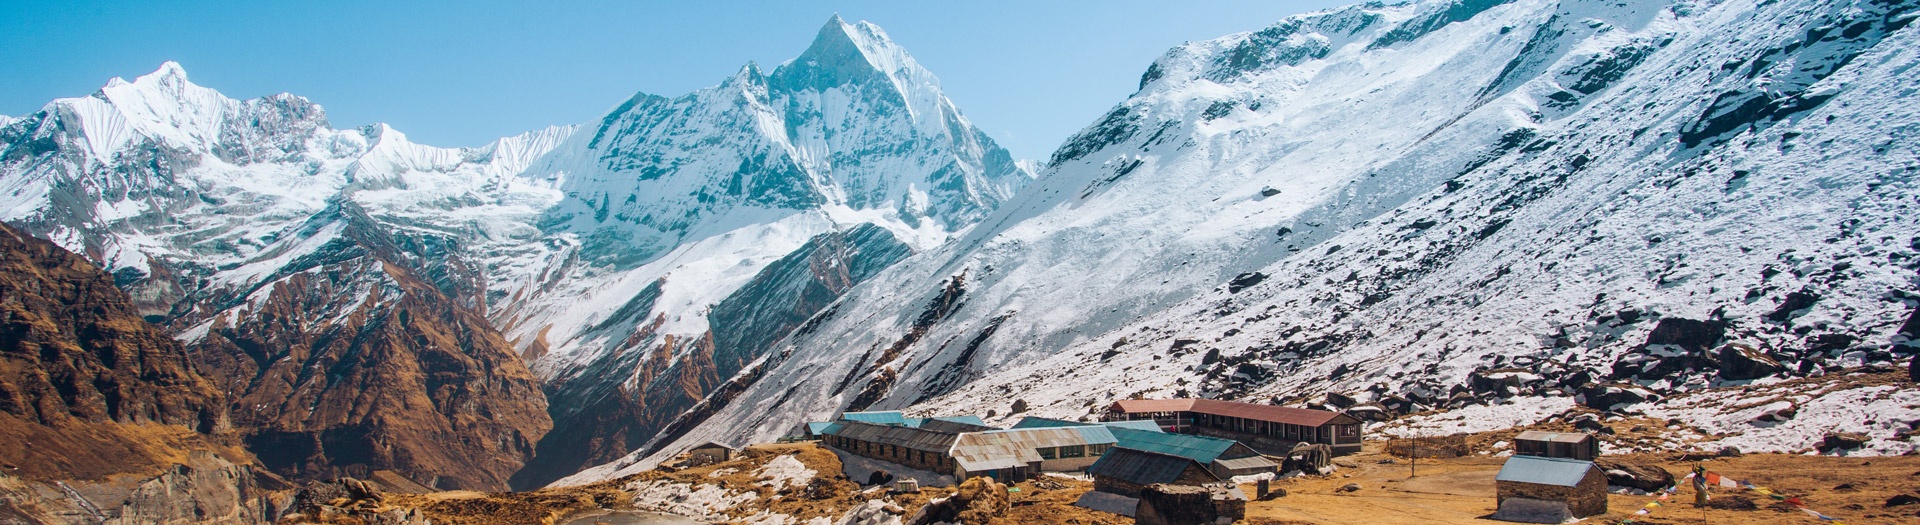 Le Camp Base des Annapurnas